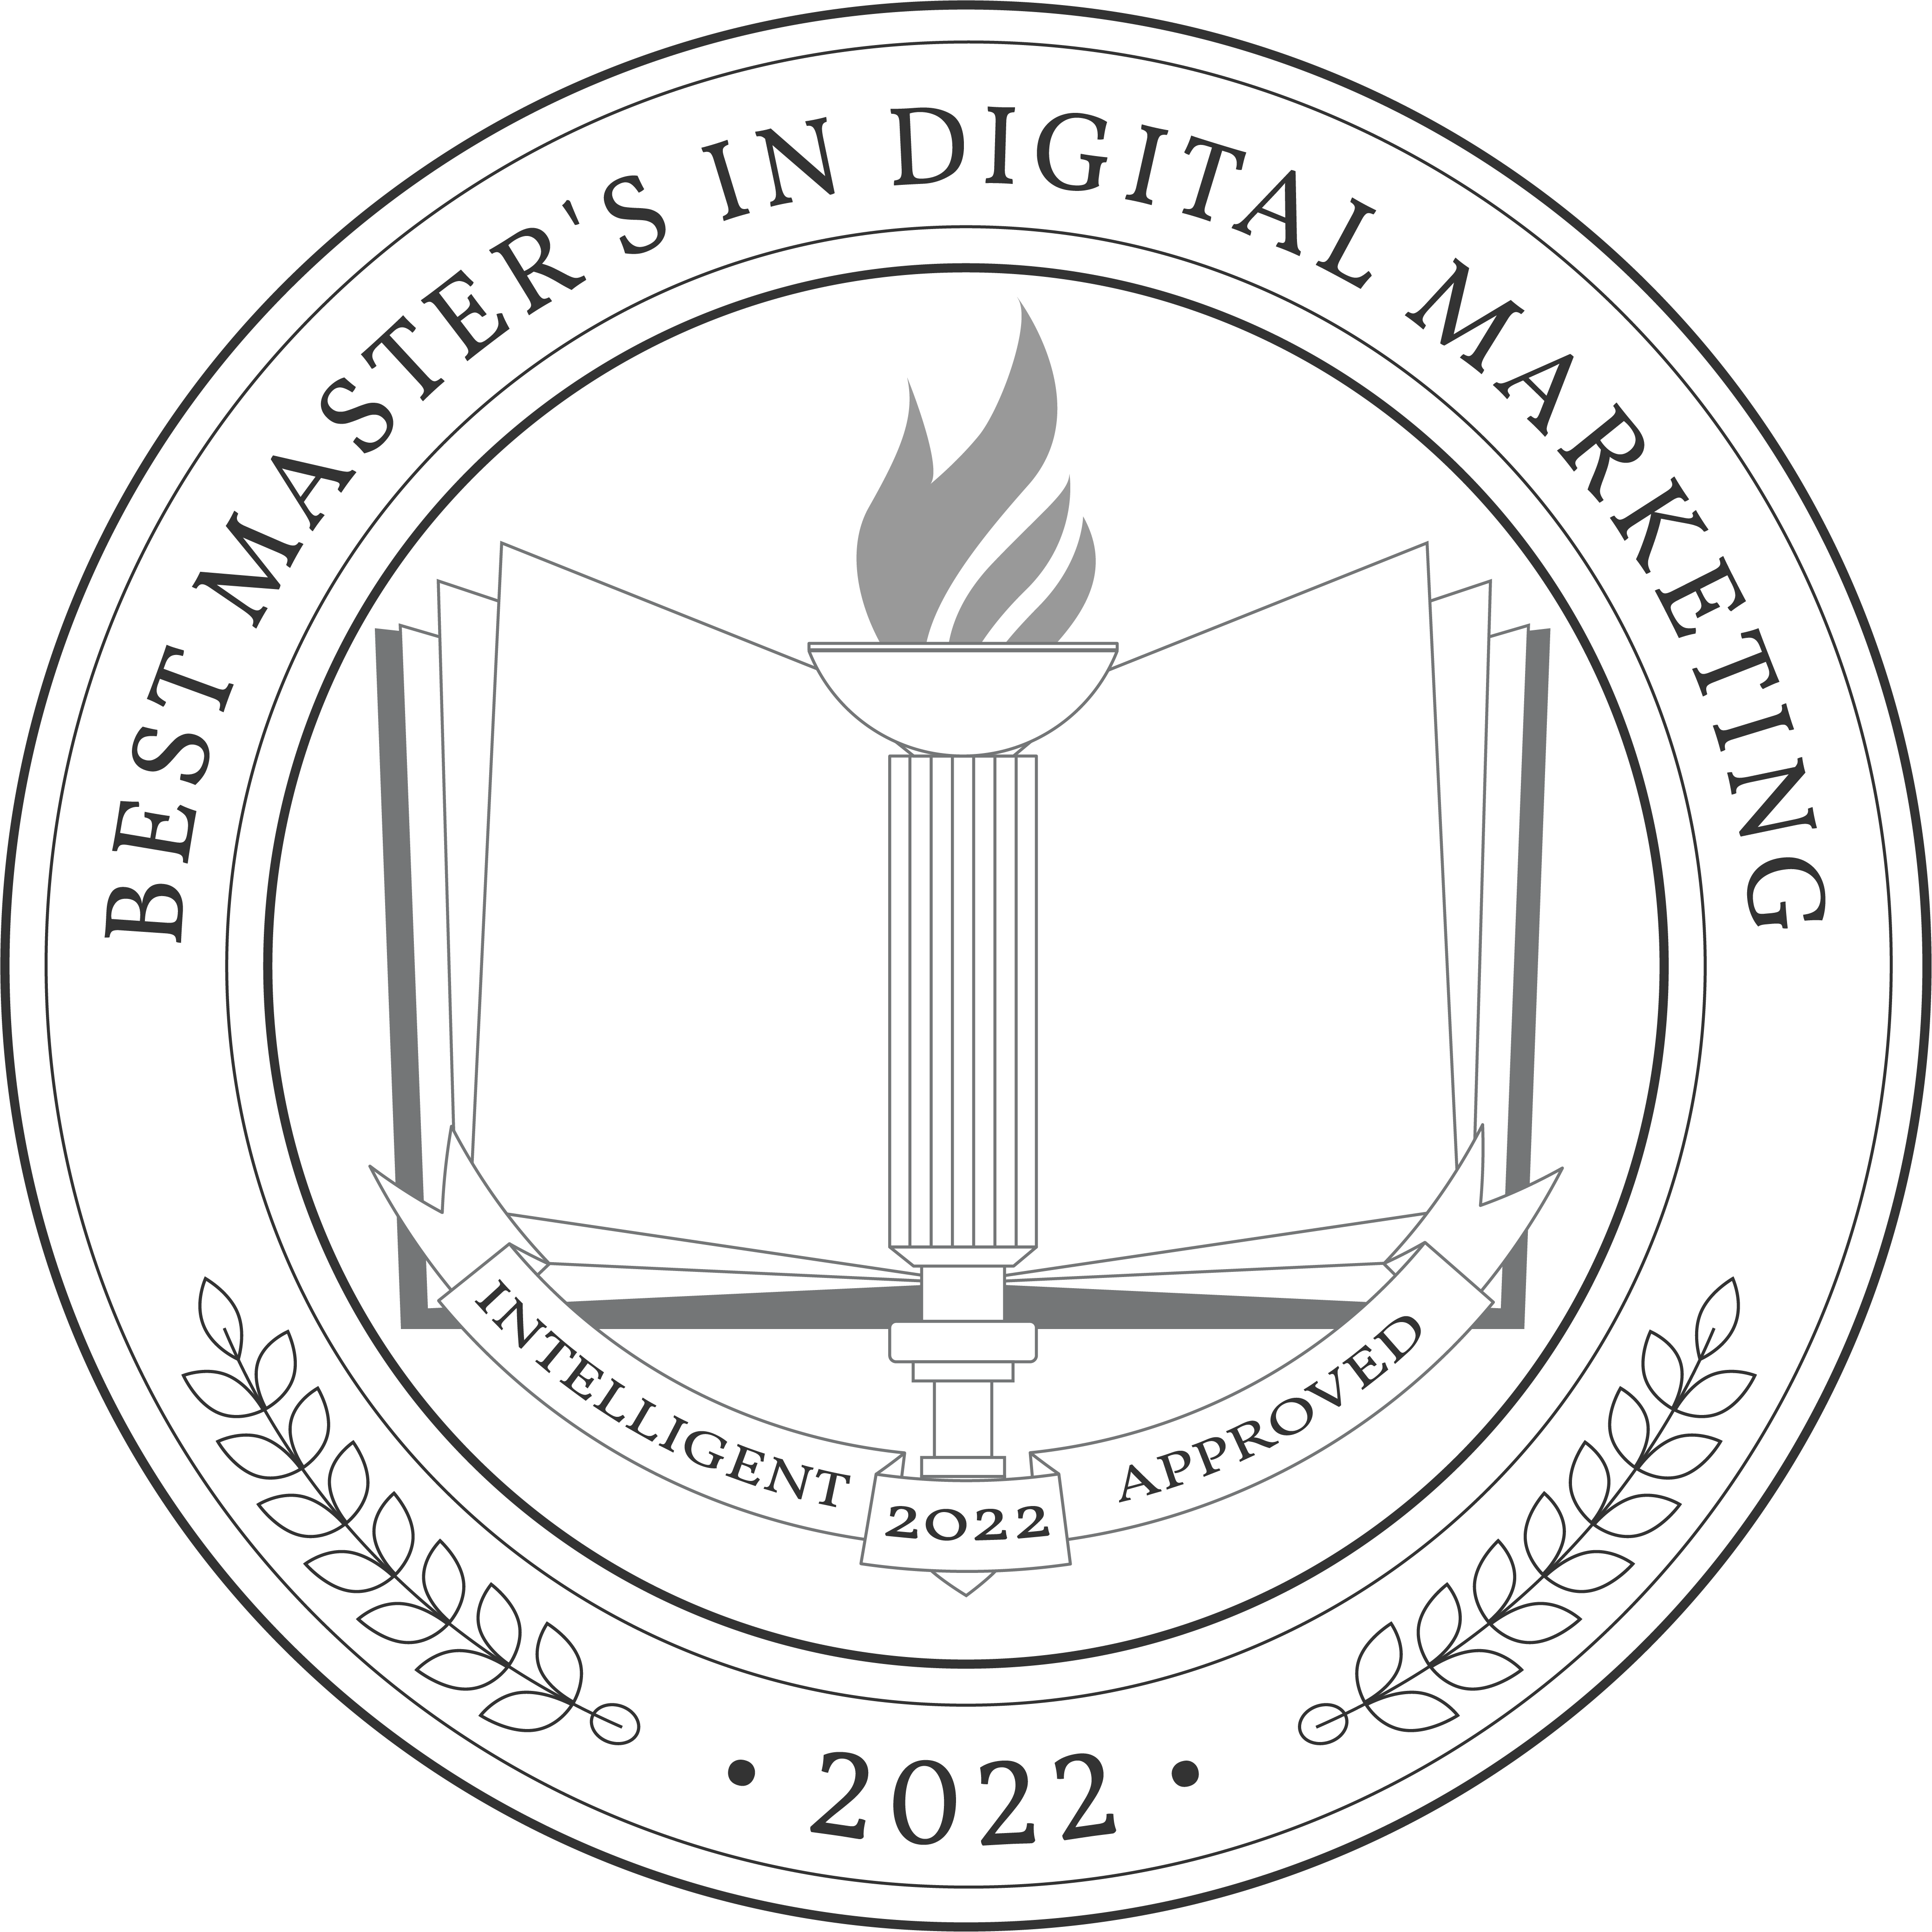 Best Master's in Digital Marketing Degree Programs